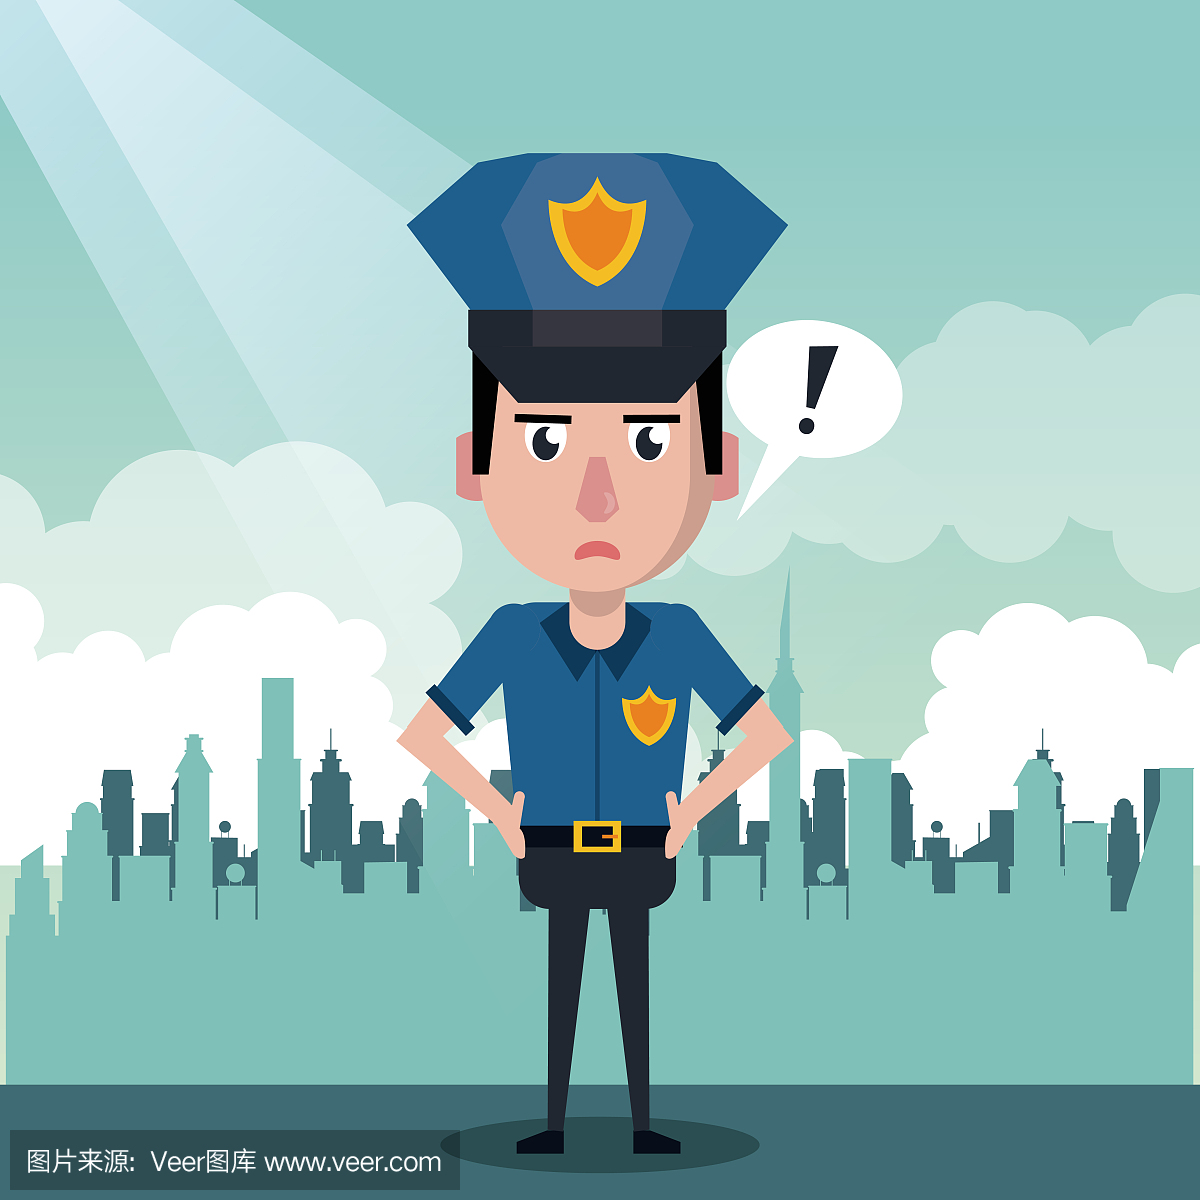 Policeman at the city cartoon